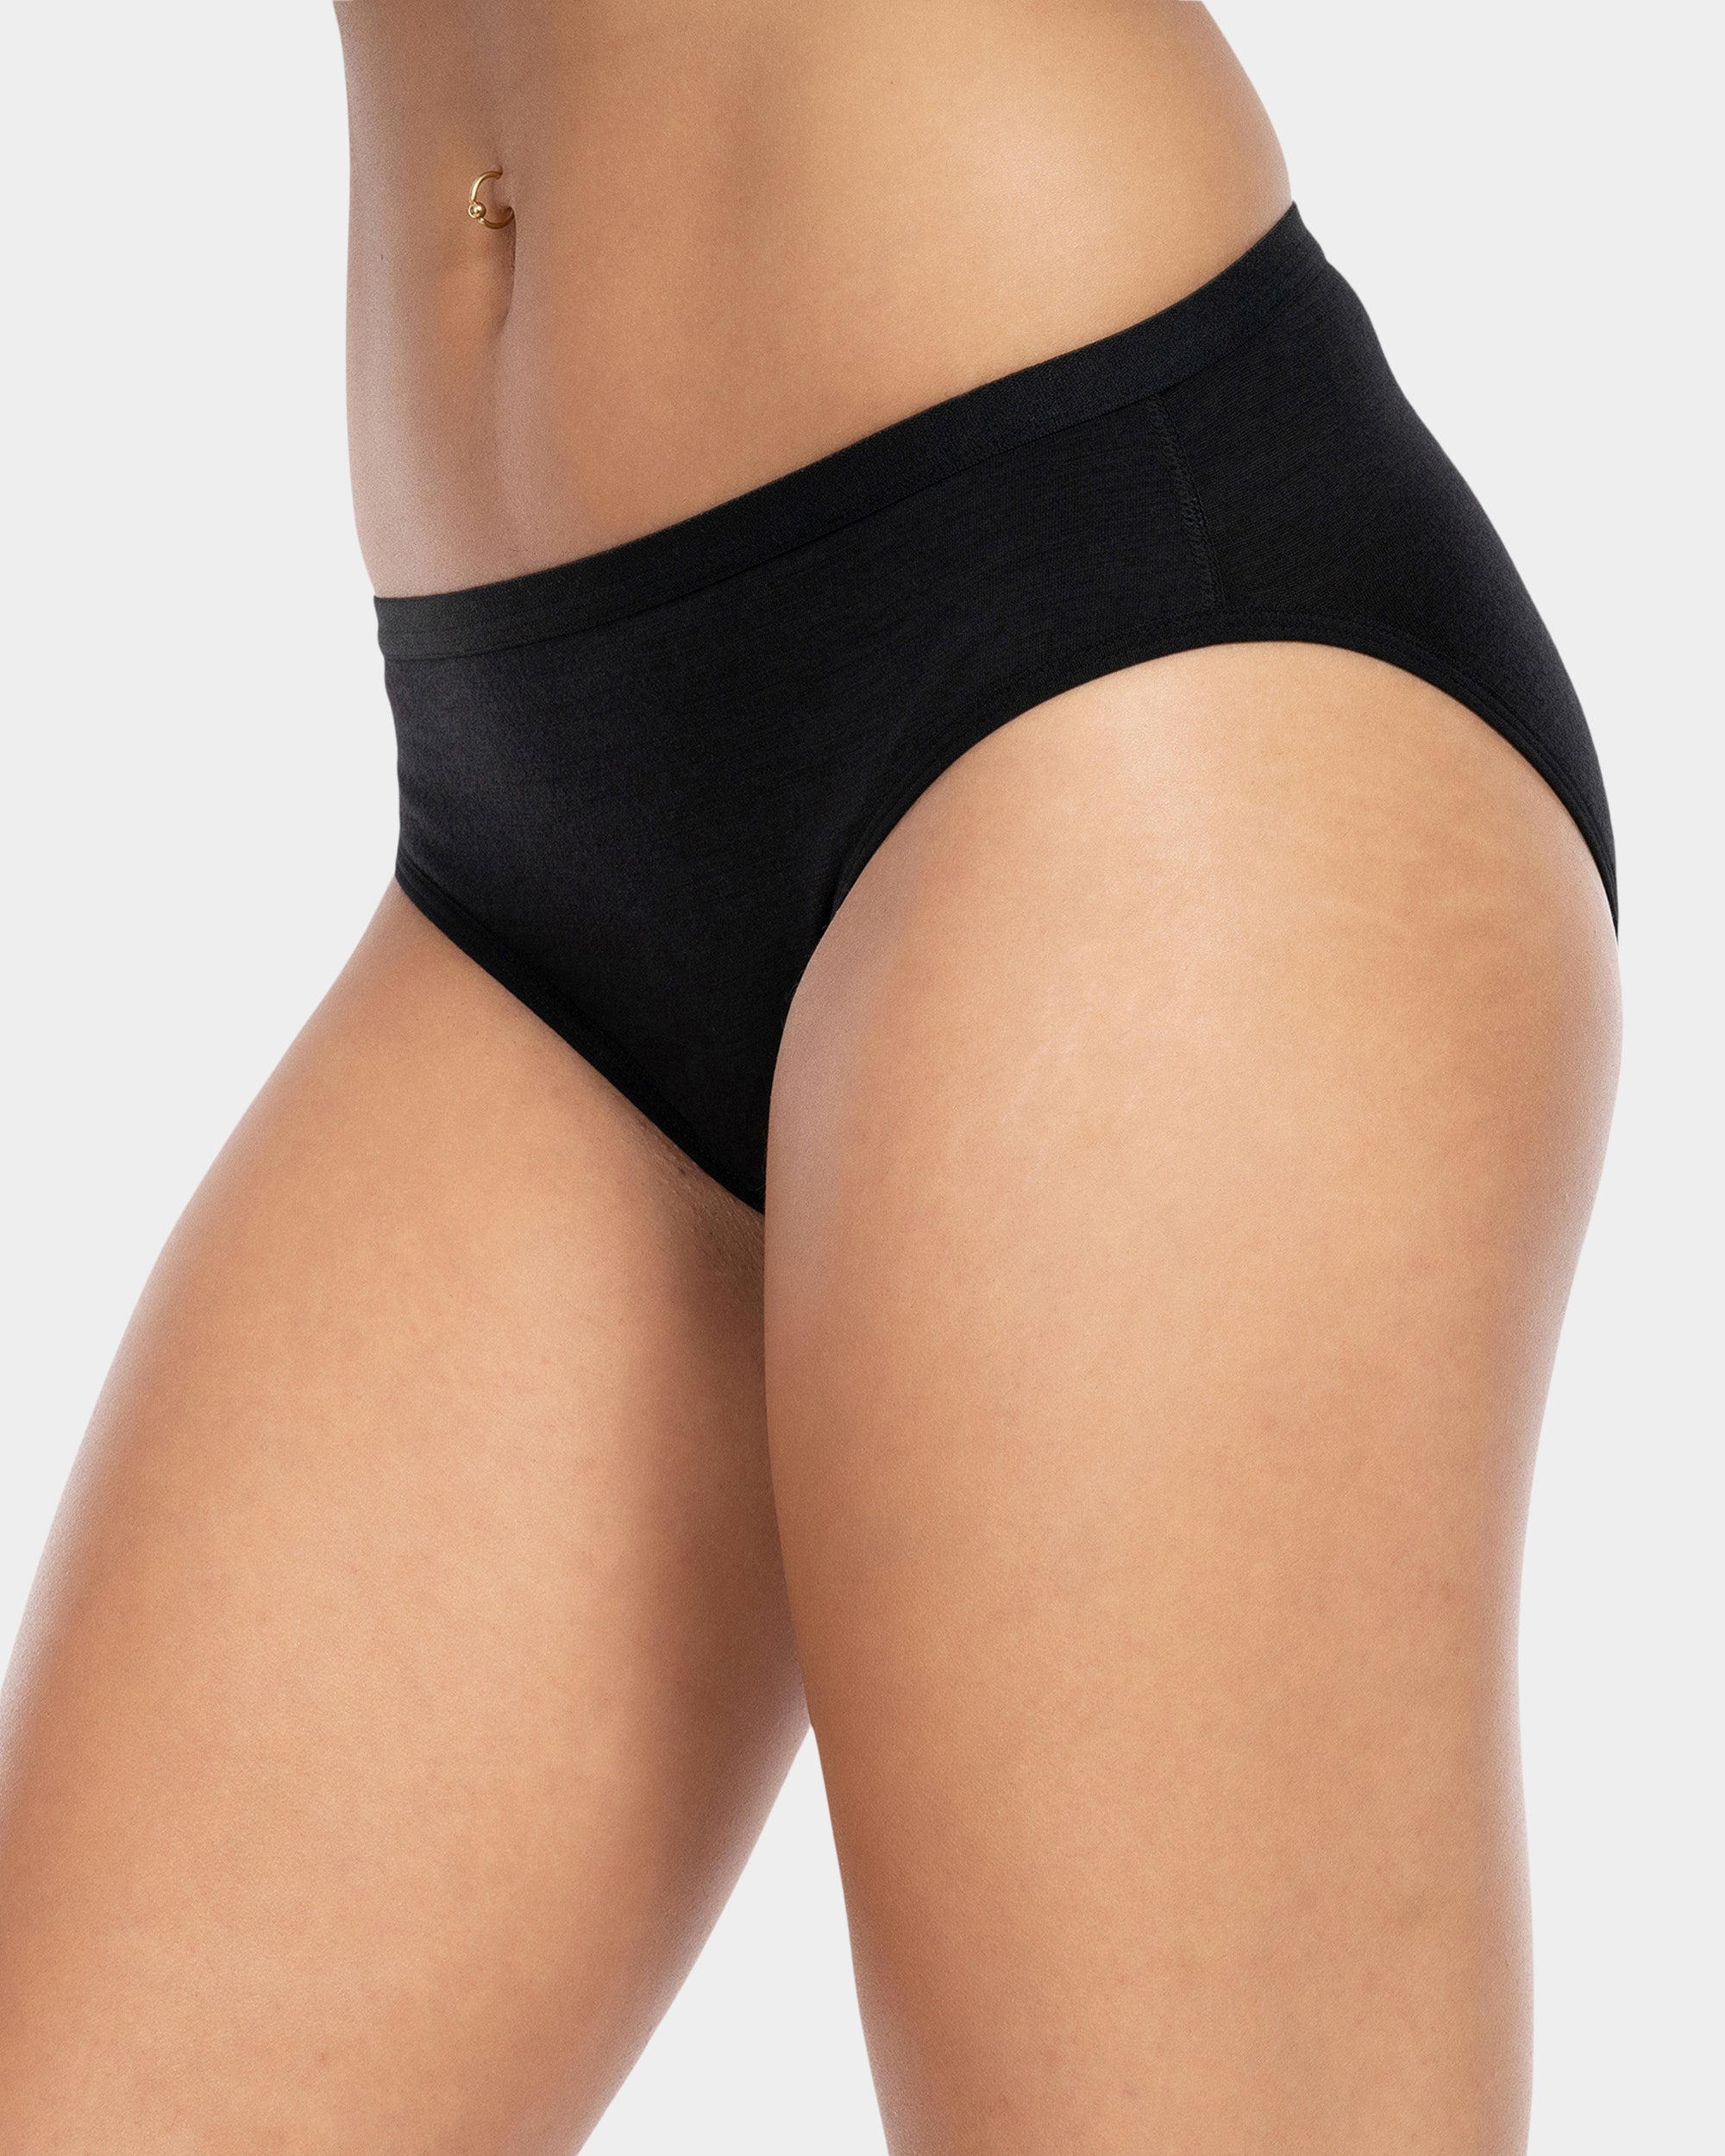 100% Merino Wool Briefs Women Underwear 170g Lightweight Quick Drying  Breathable Sports Hiking Yoga Woman Daily Briefs Bikini